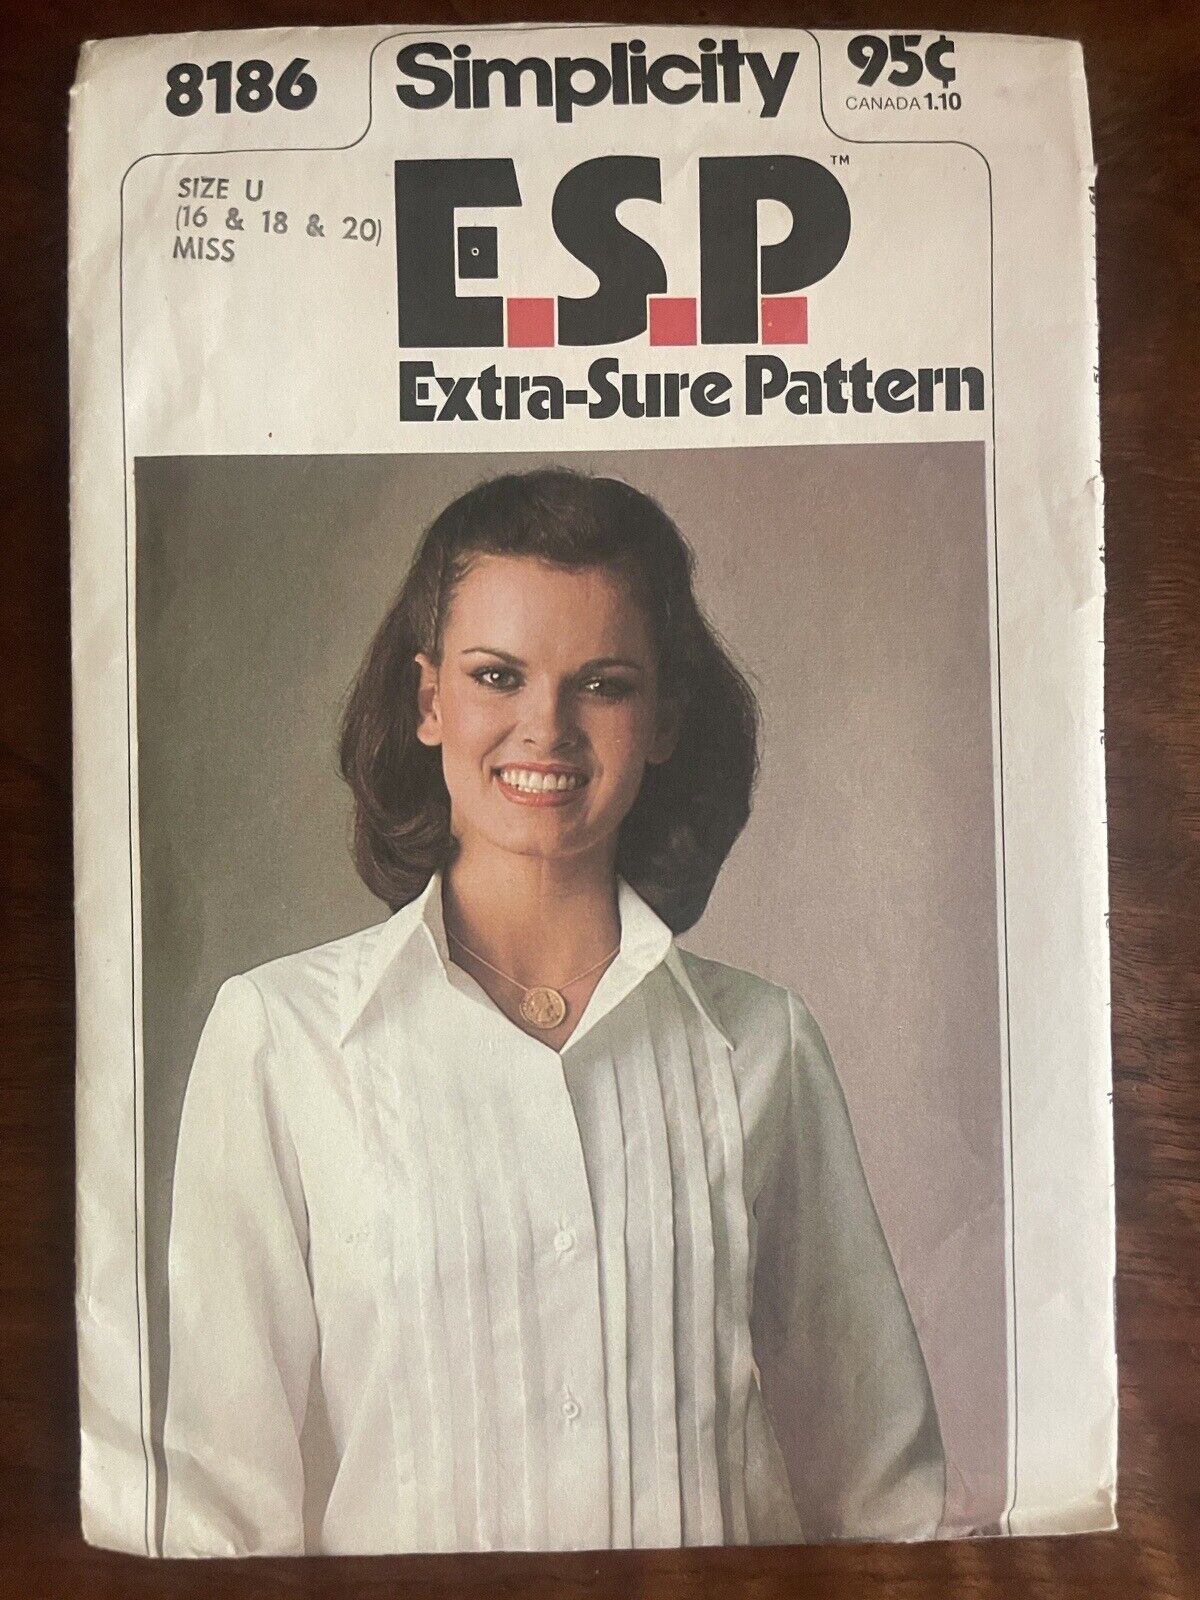 Vintage Simplicity ESP Extra Sure Pattern 8186 Shirt Cut Size U 16, 18, 20